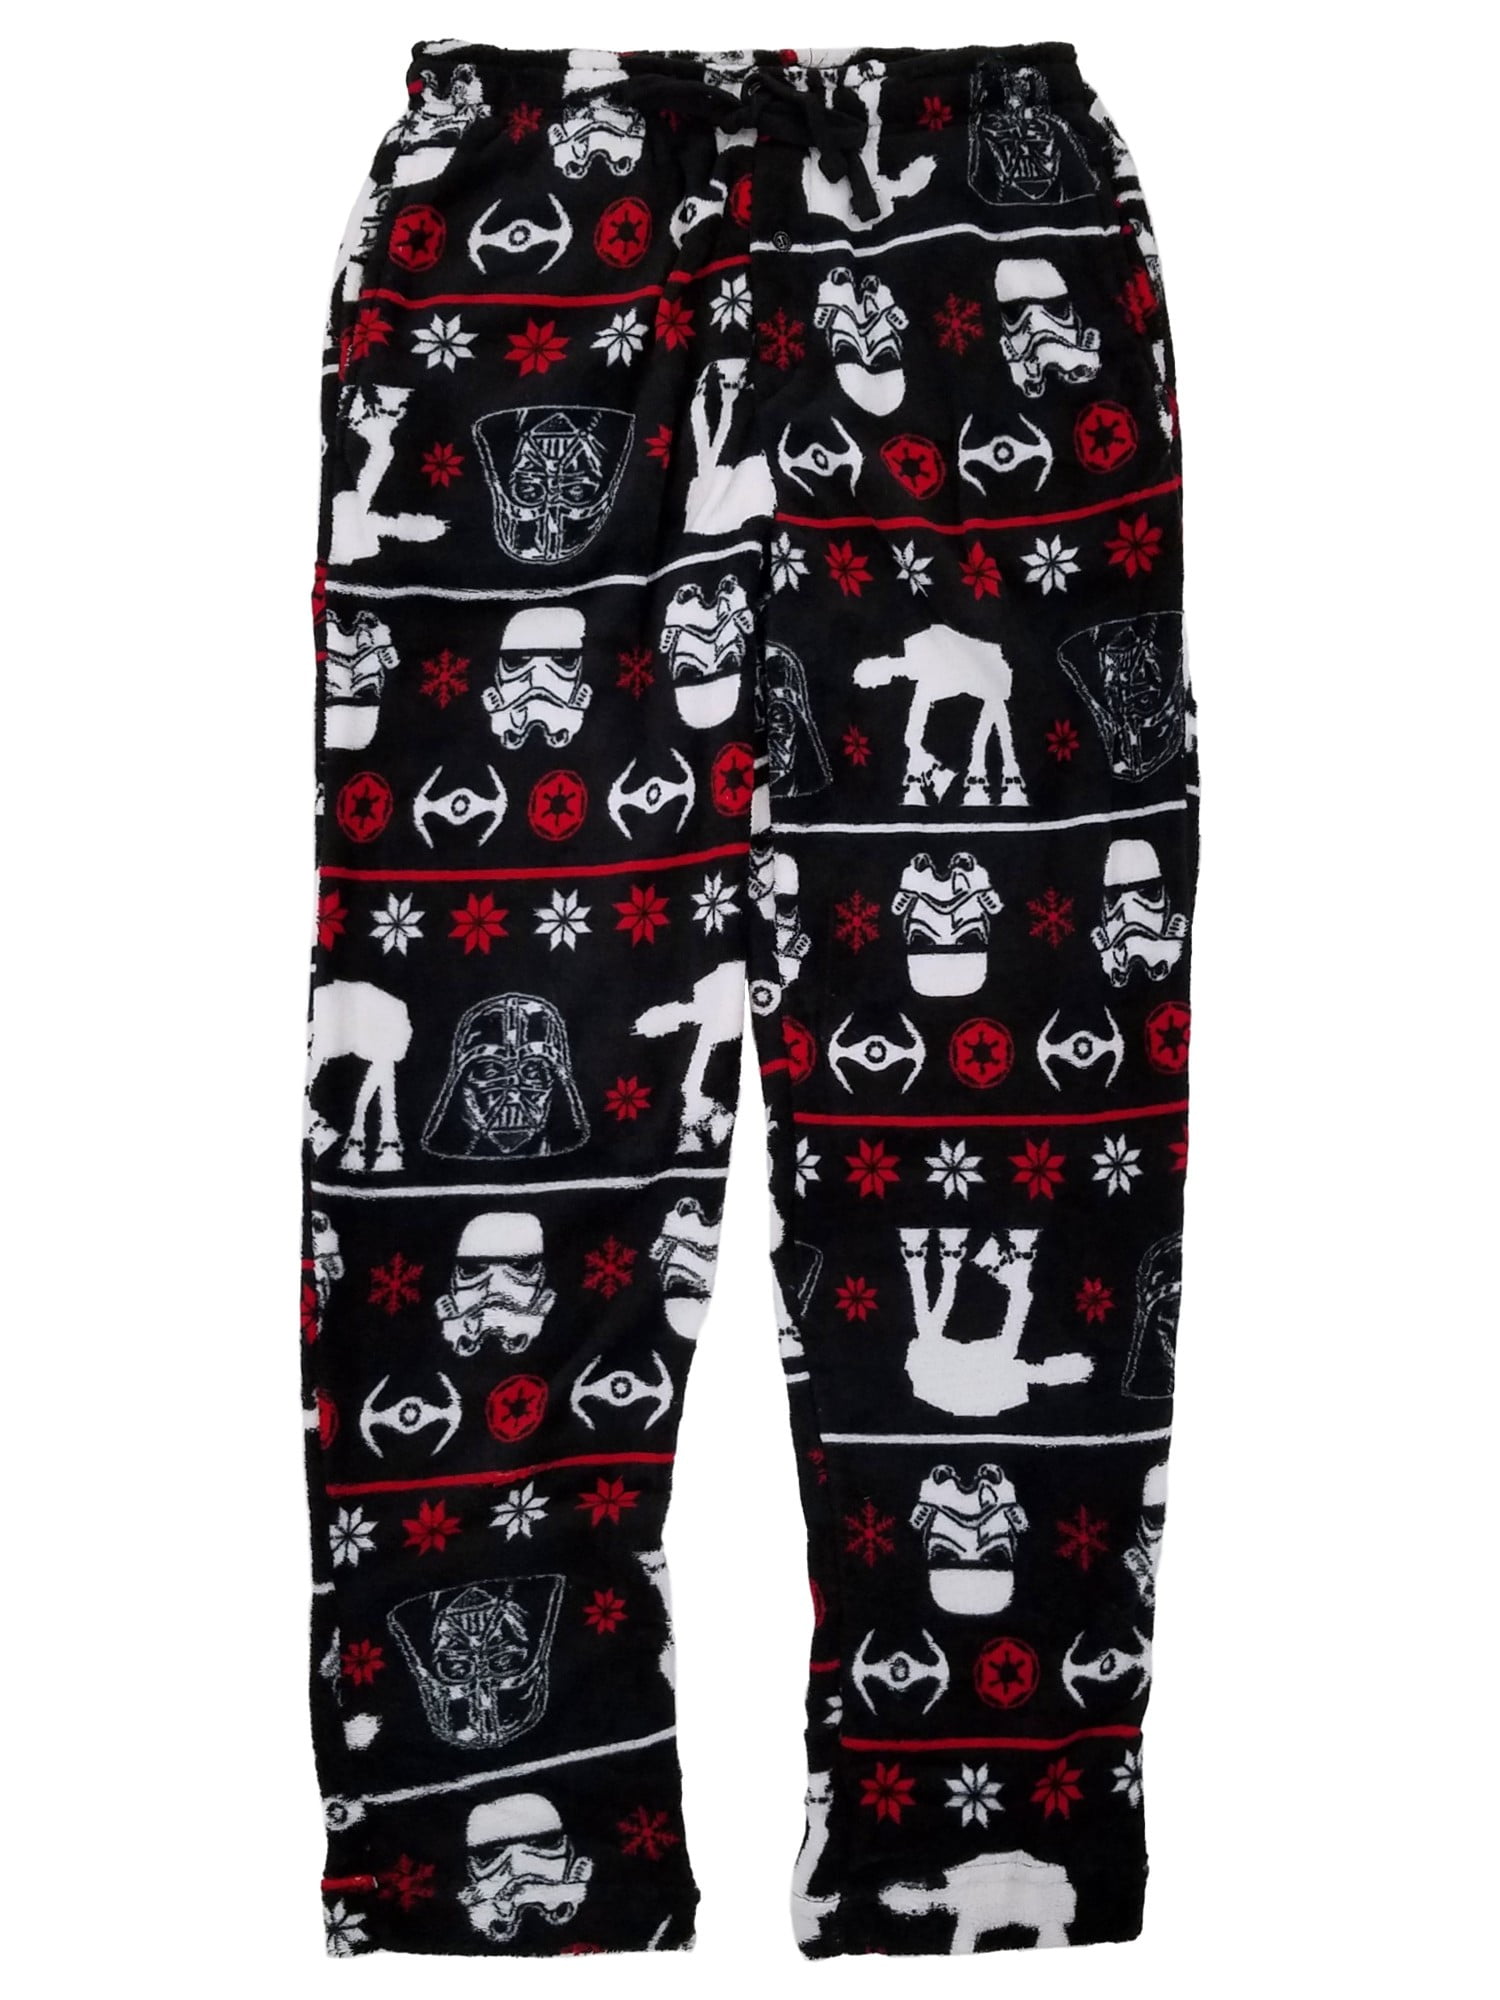 Mens Pyjama Bottoms Size Small XL NEW Star Wars Mens Lounge Pants 